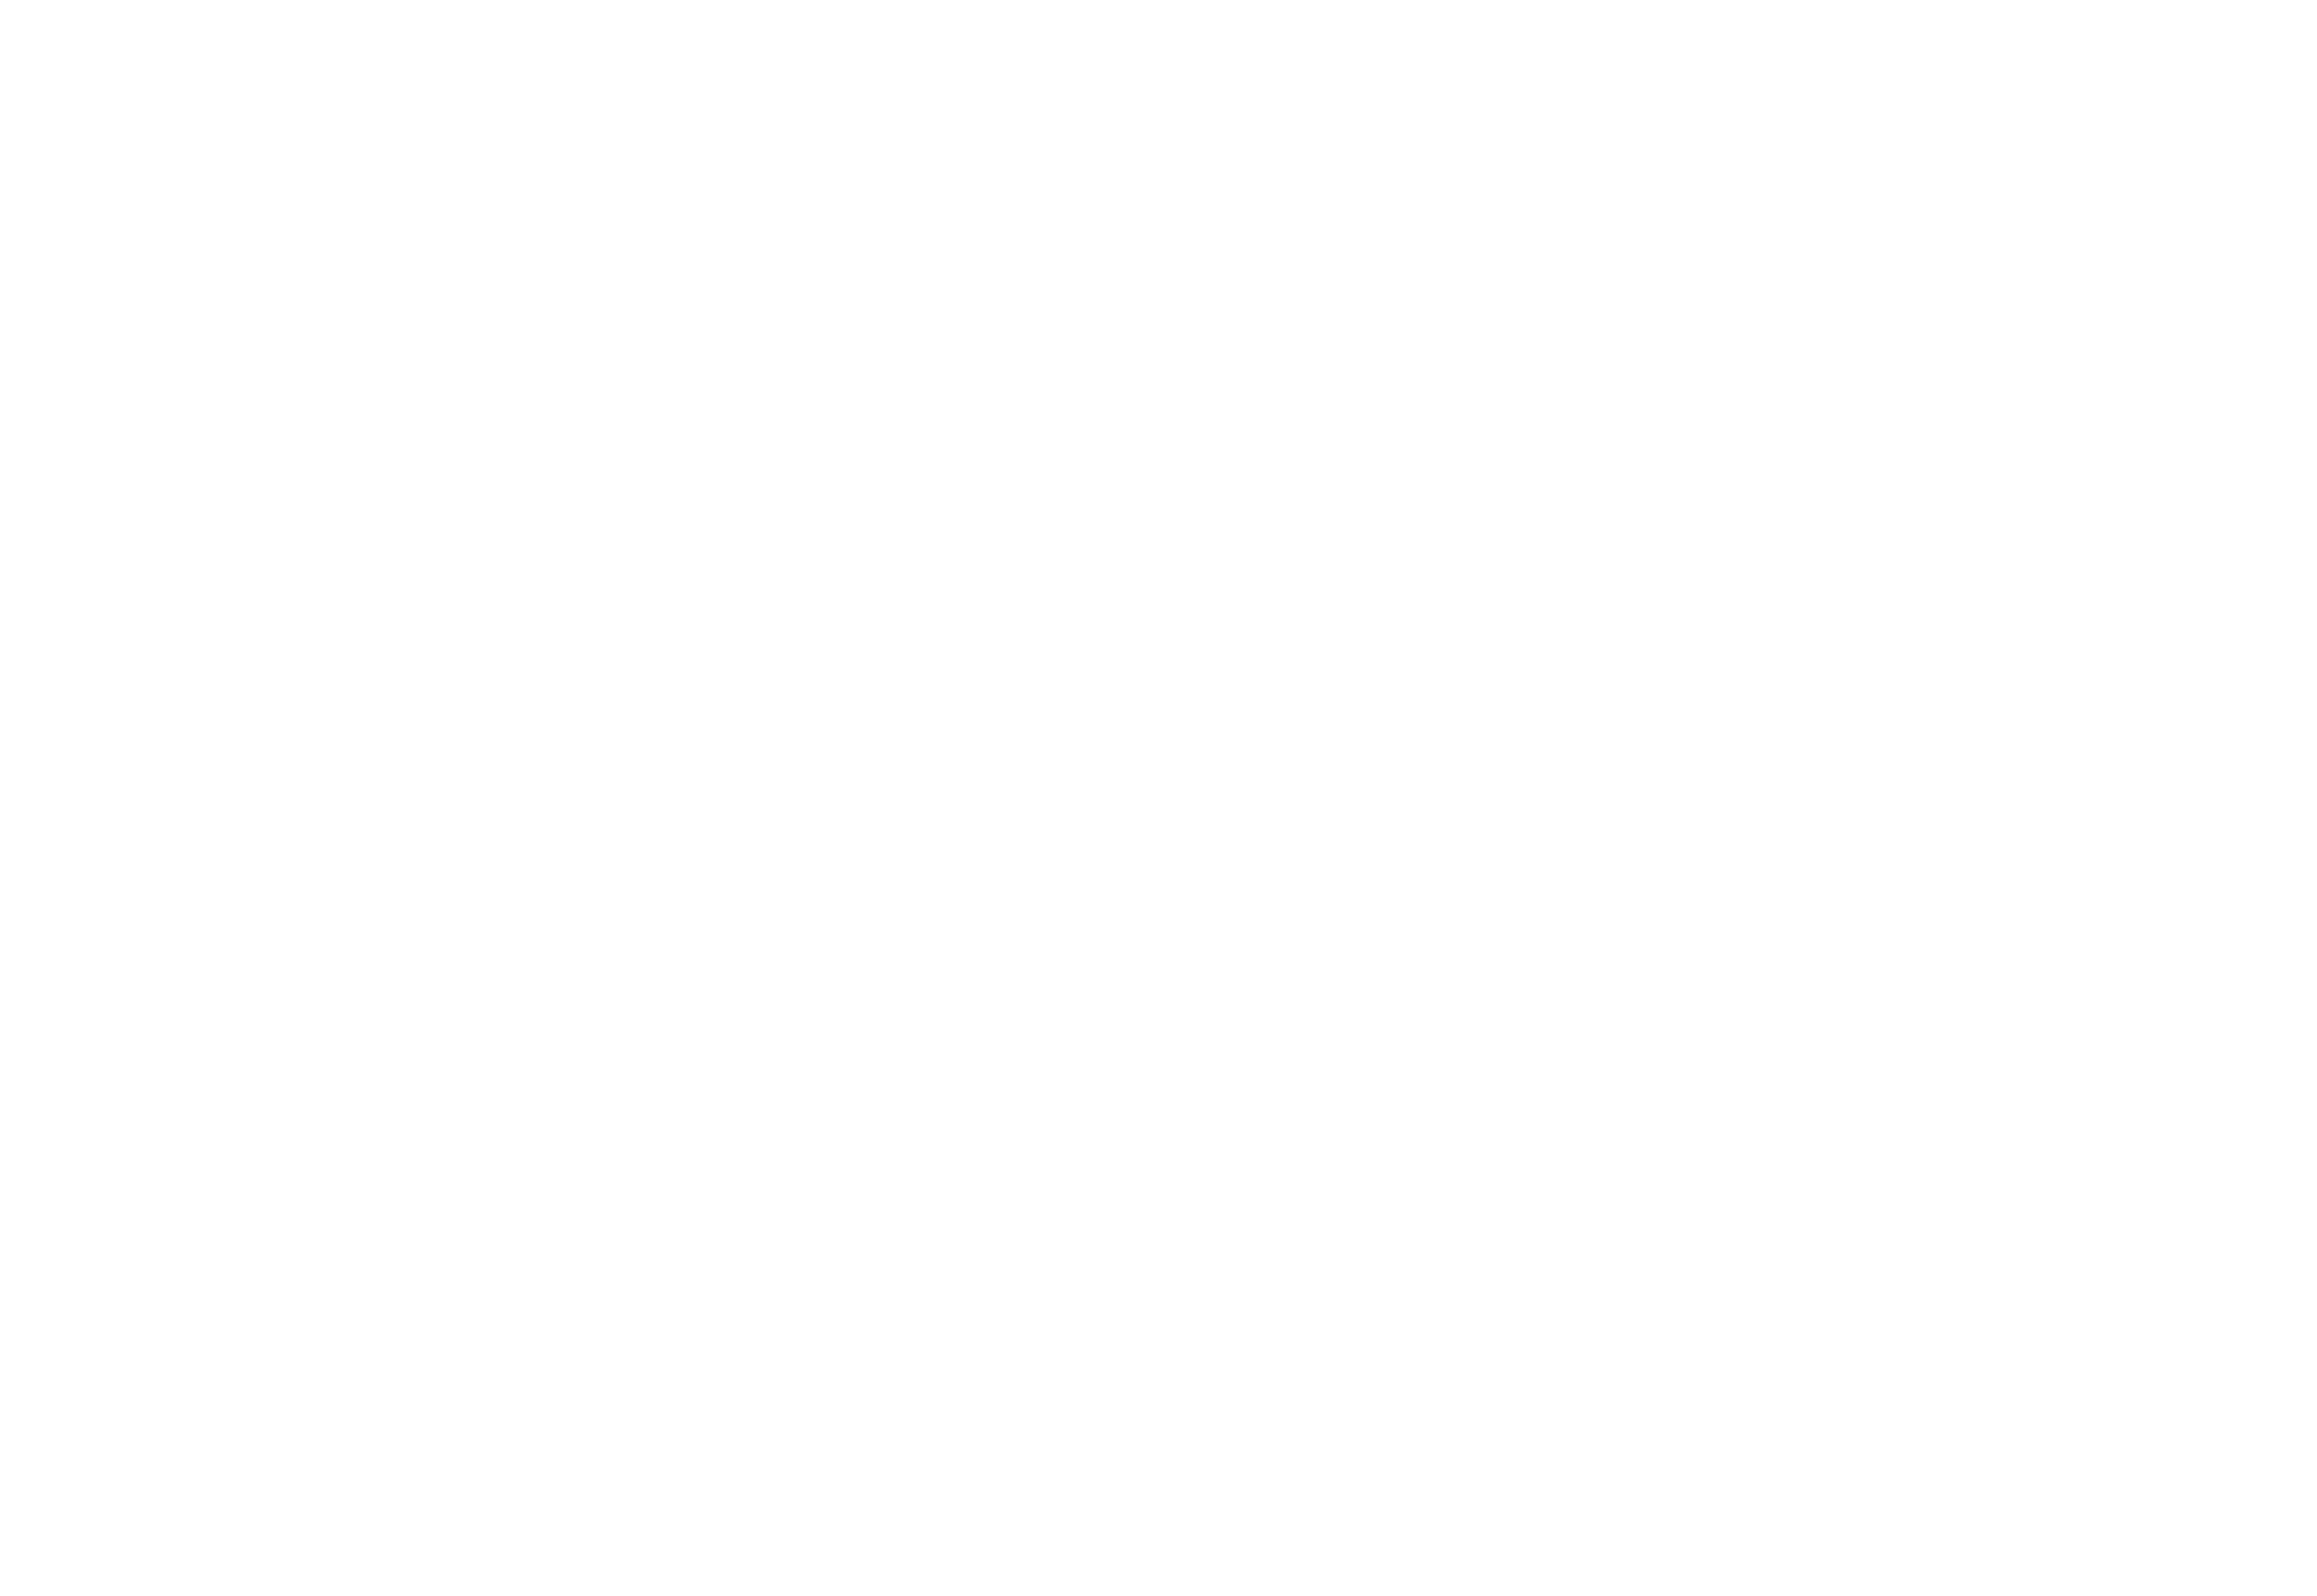 Fish to Fish